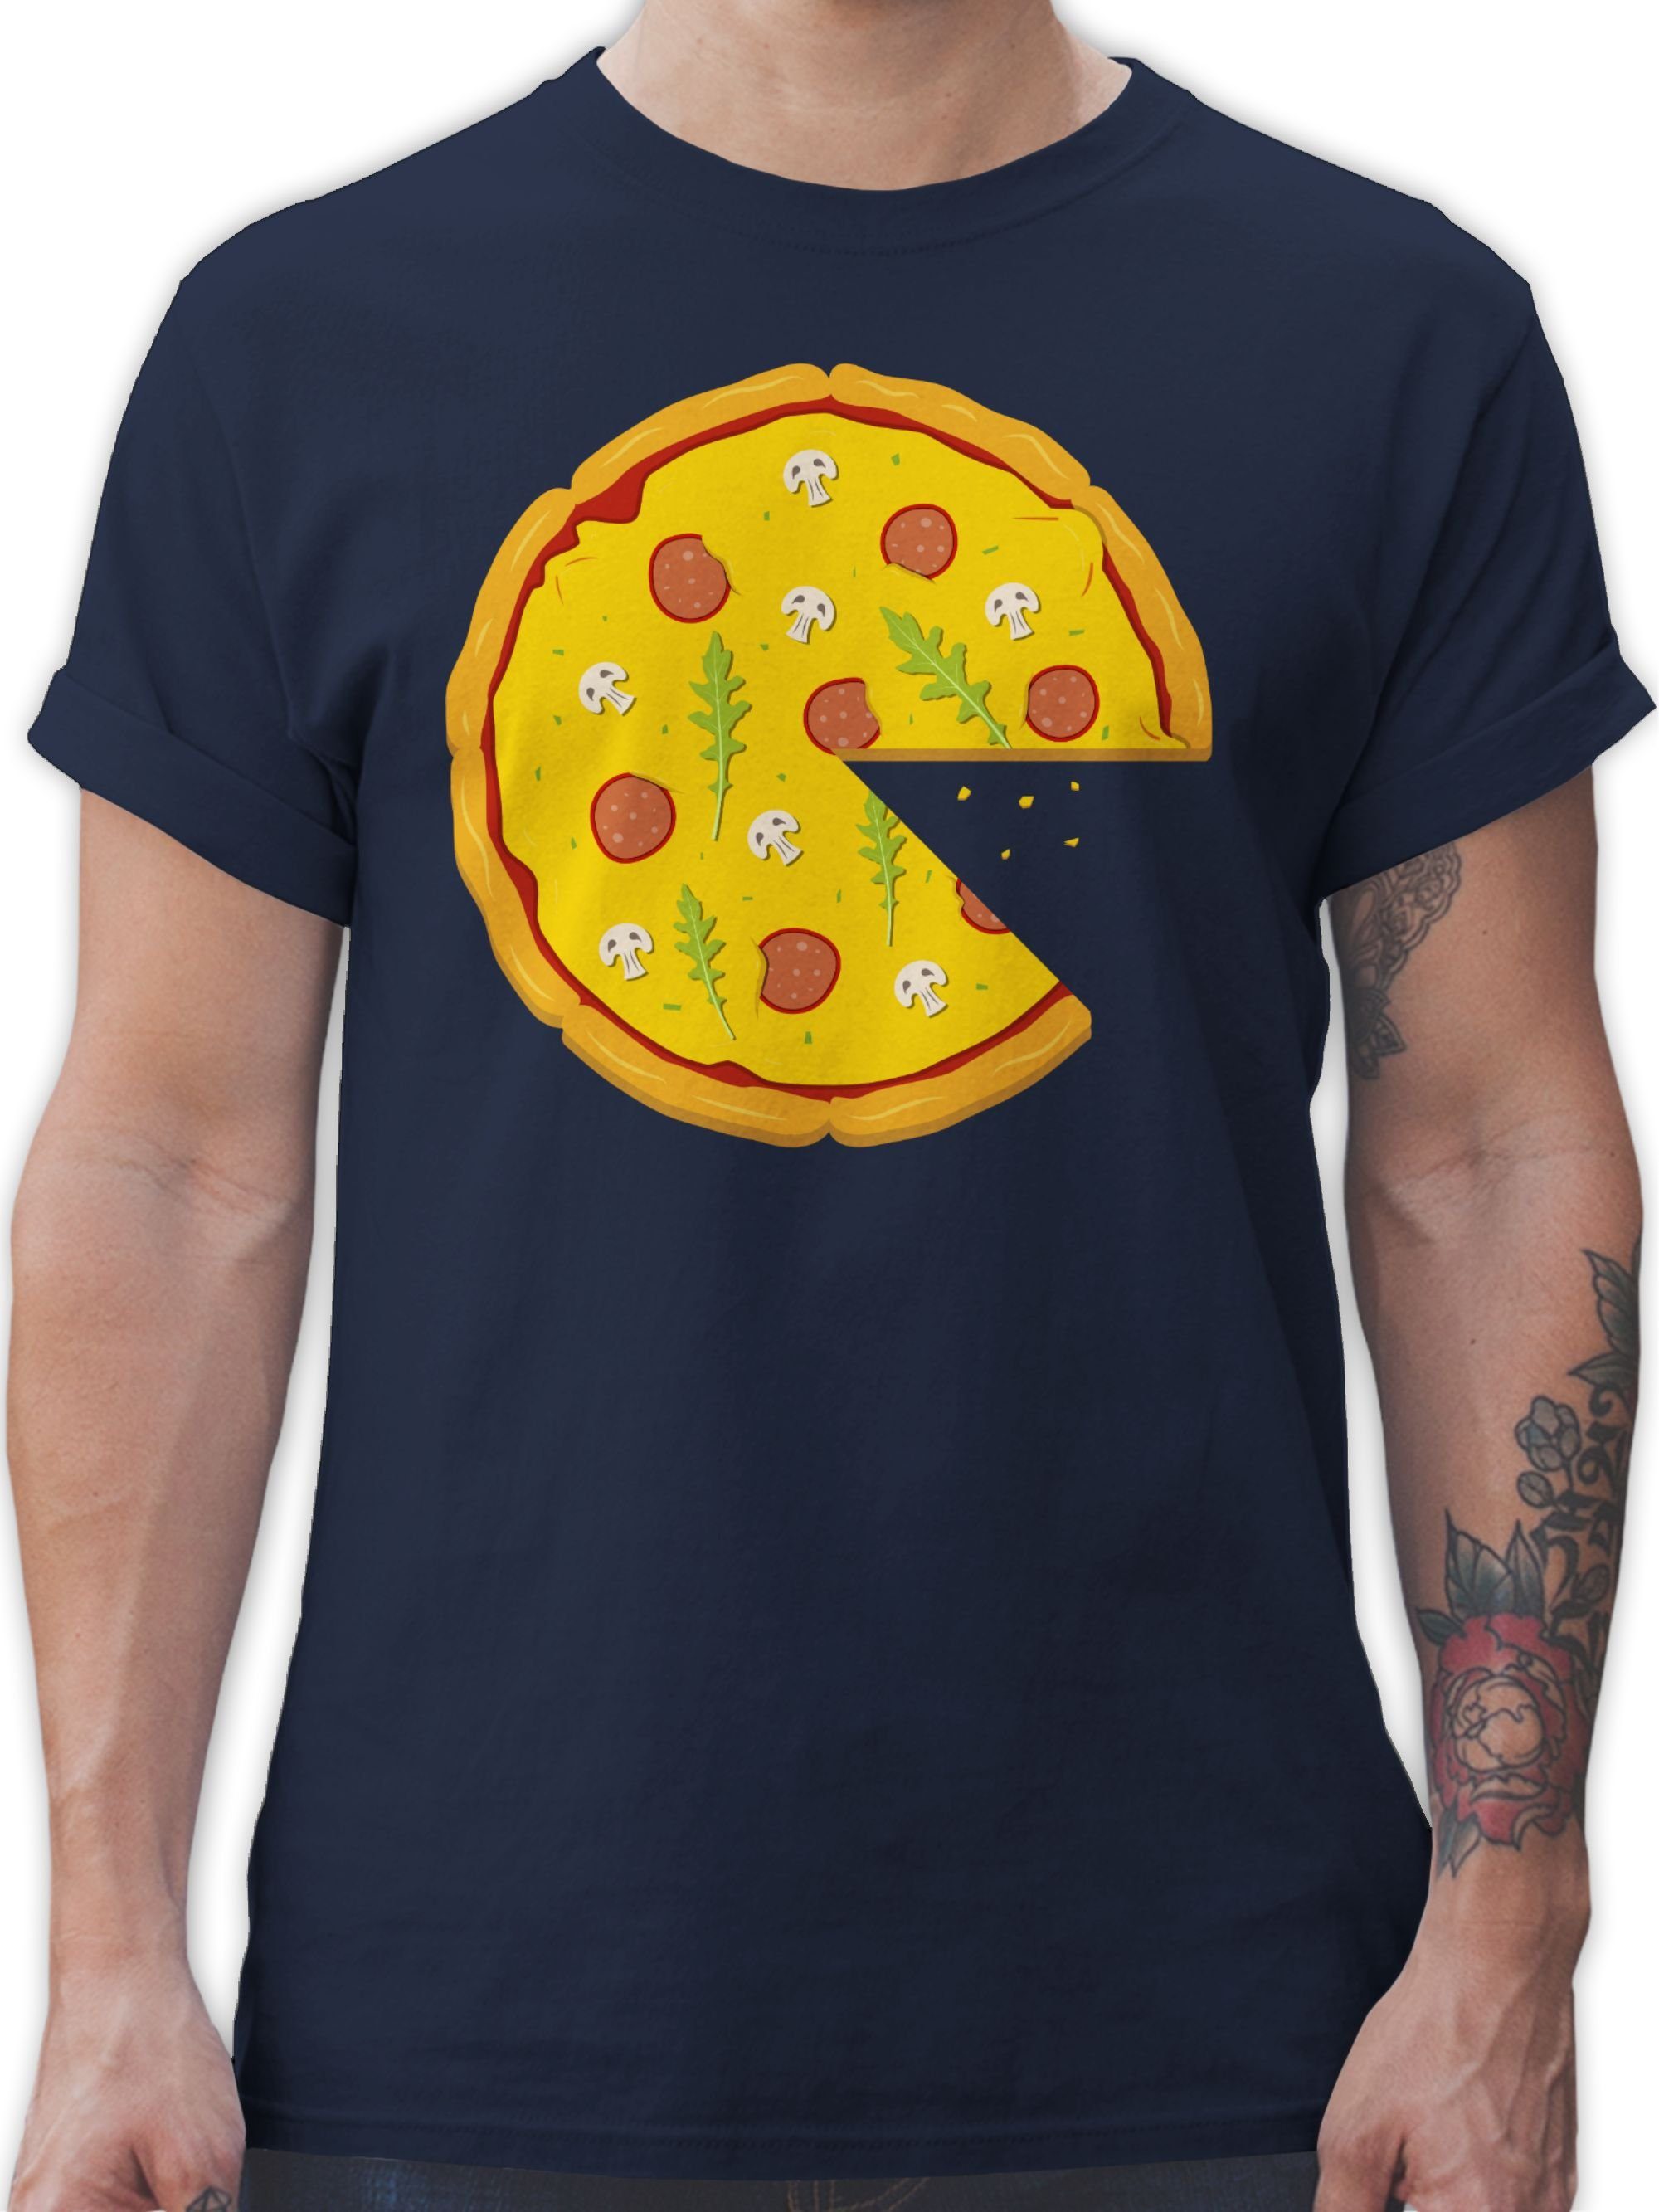 T-Shirt Navy 3 Partner Pärchen Partner-Look Herren Blau 1 Teil Pizza Shirtracer